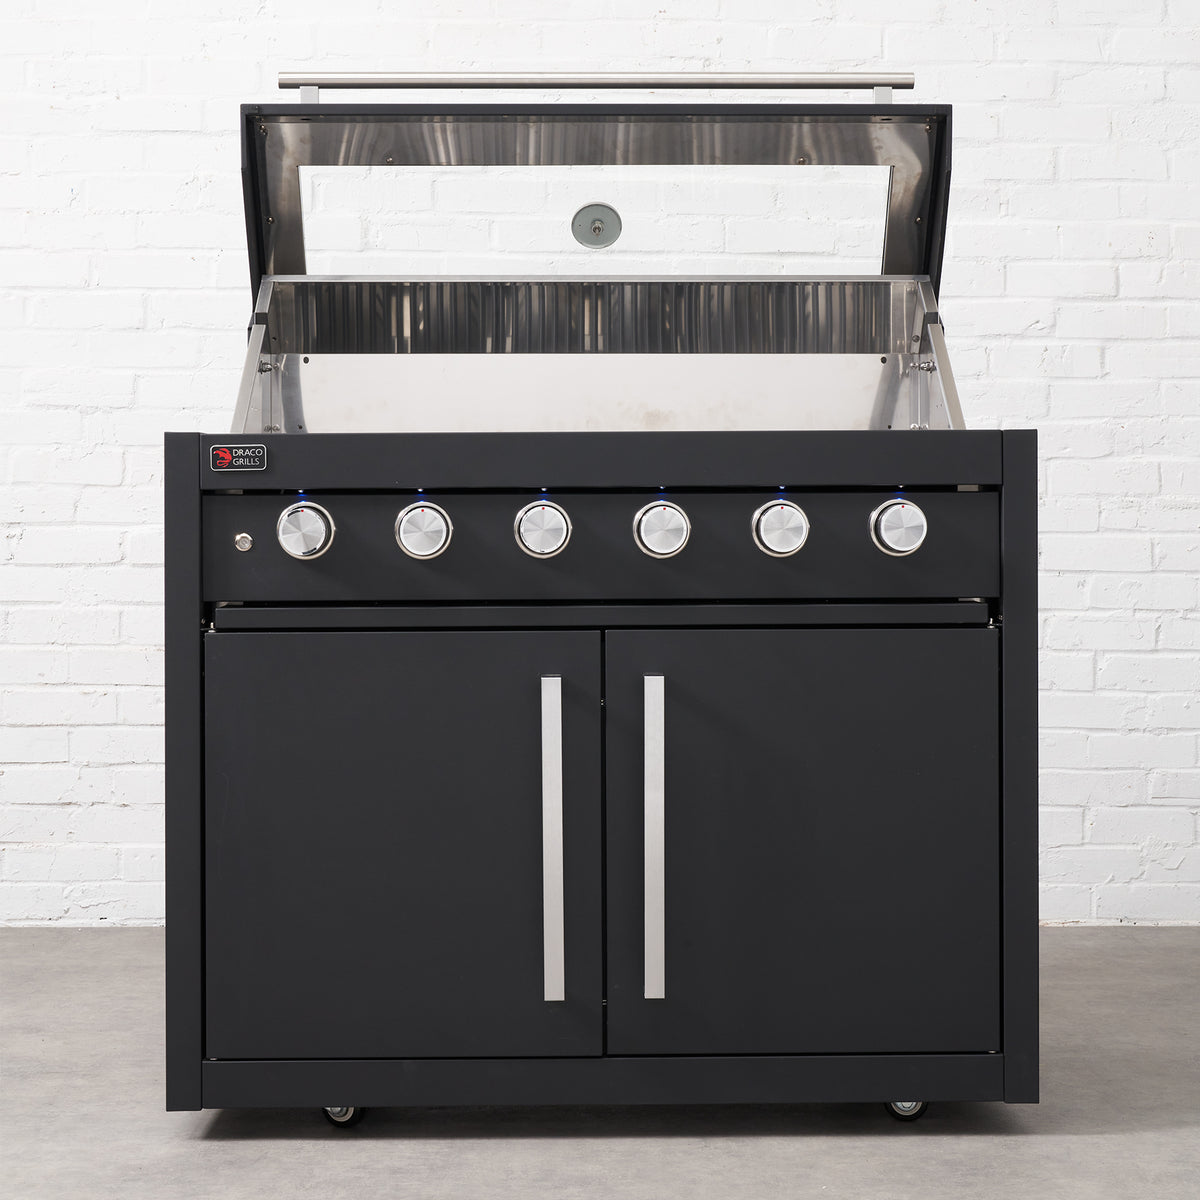 Draco Grills Fusion 6 Burner Black Outdoor Kitchen with Modular Side Burner, Double Fridge, 90 Degree Corner, Double Cupboard